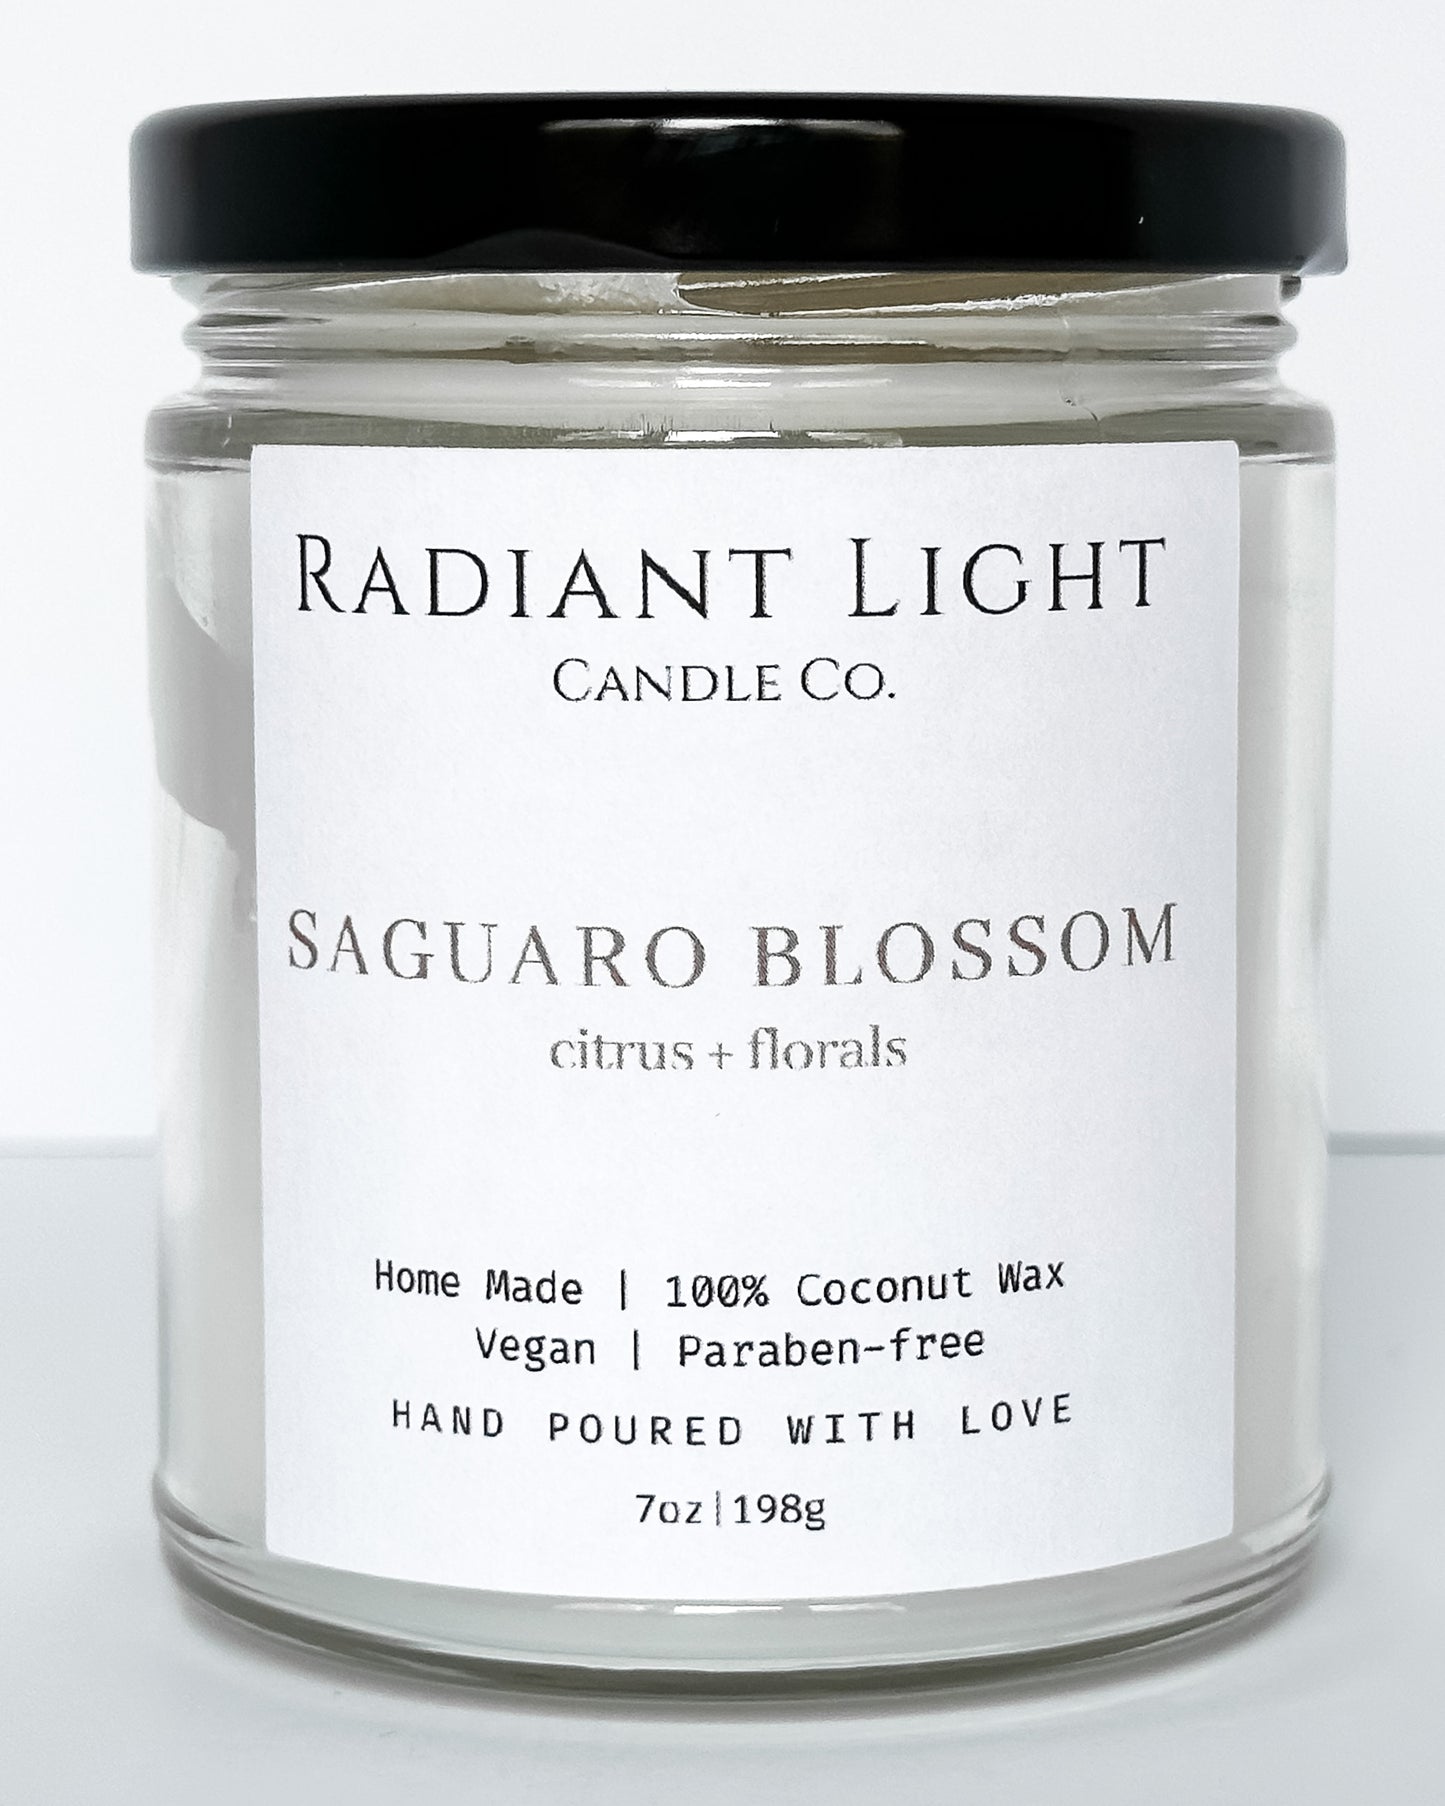 Saguaro Blossom Candle